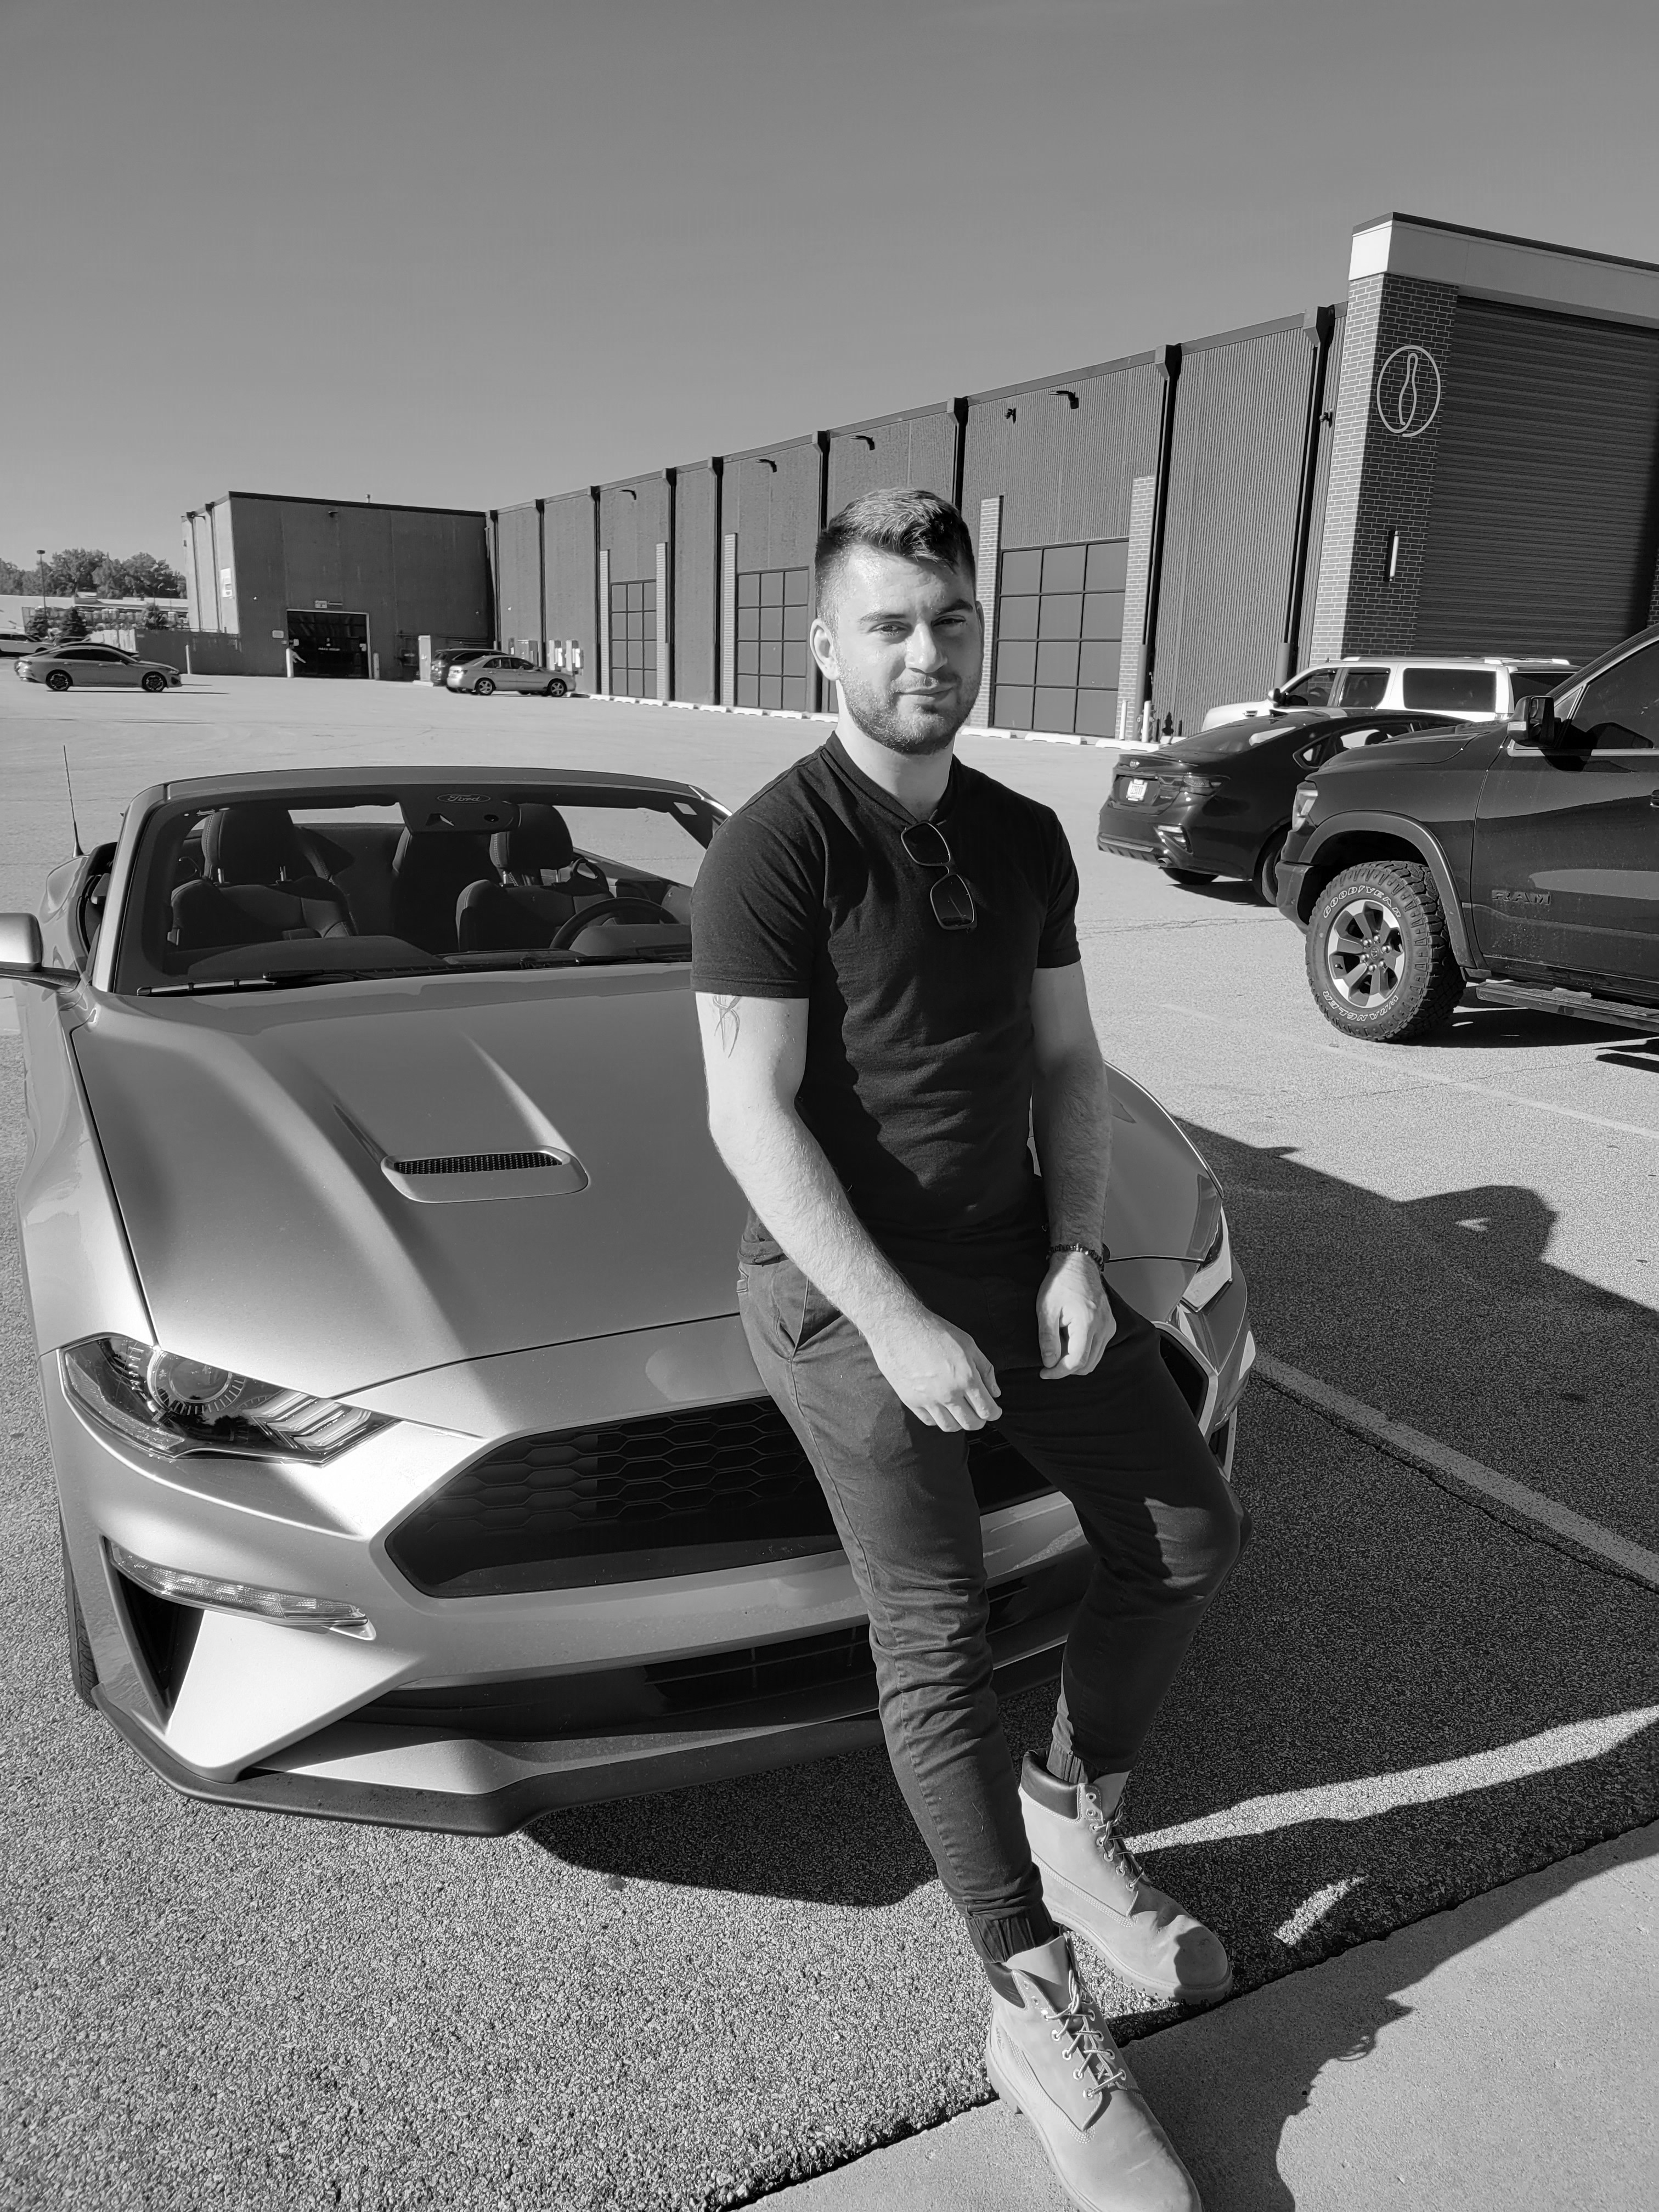 Nick Mendez Nicholas Mendez photo with a Mustang car